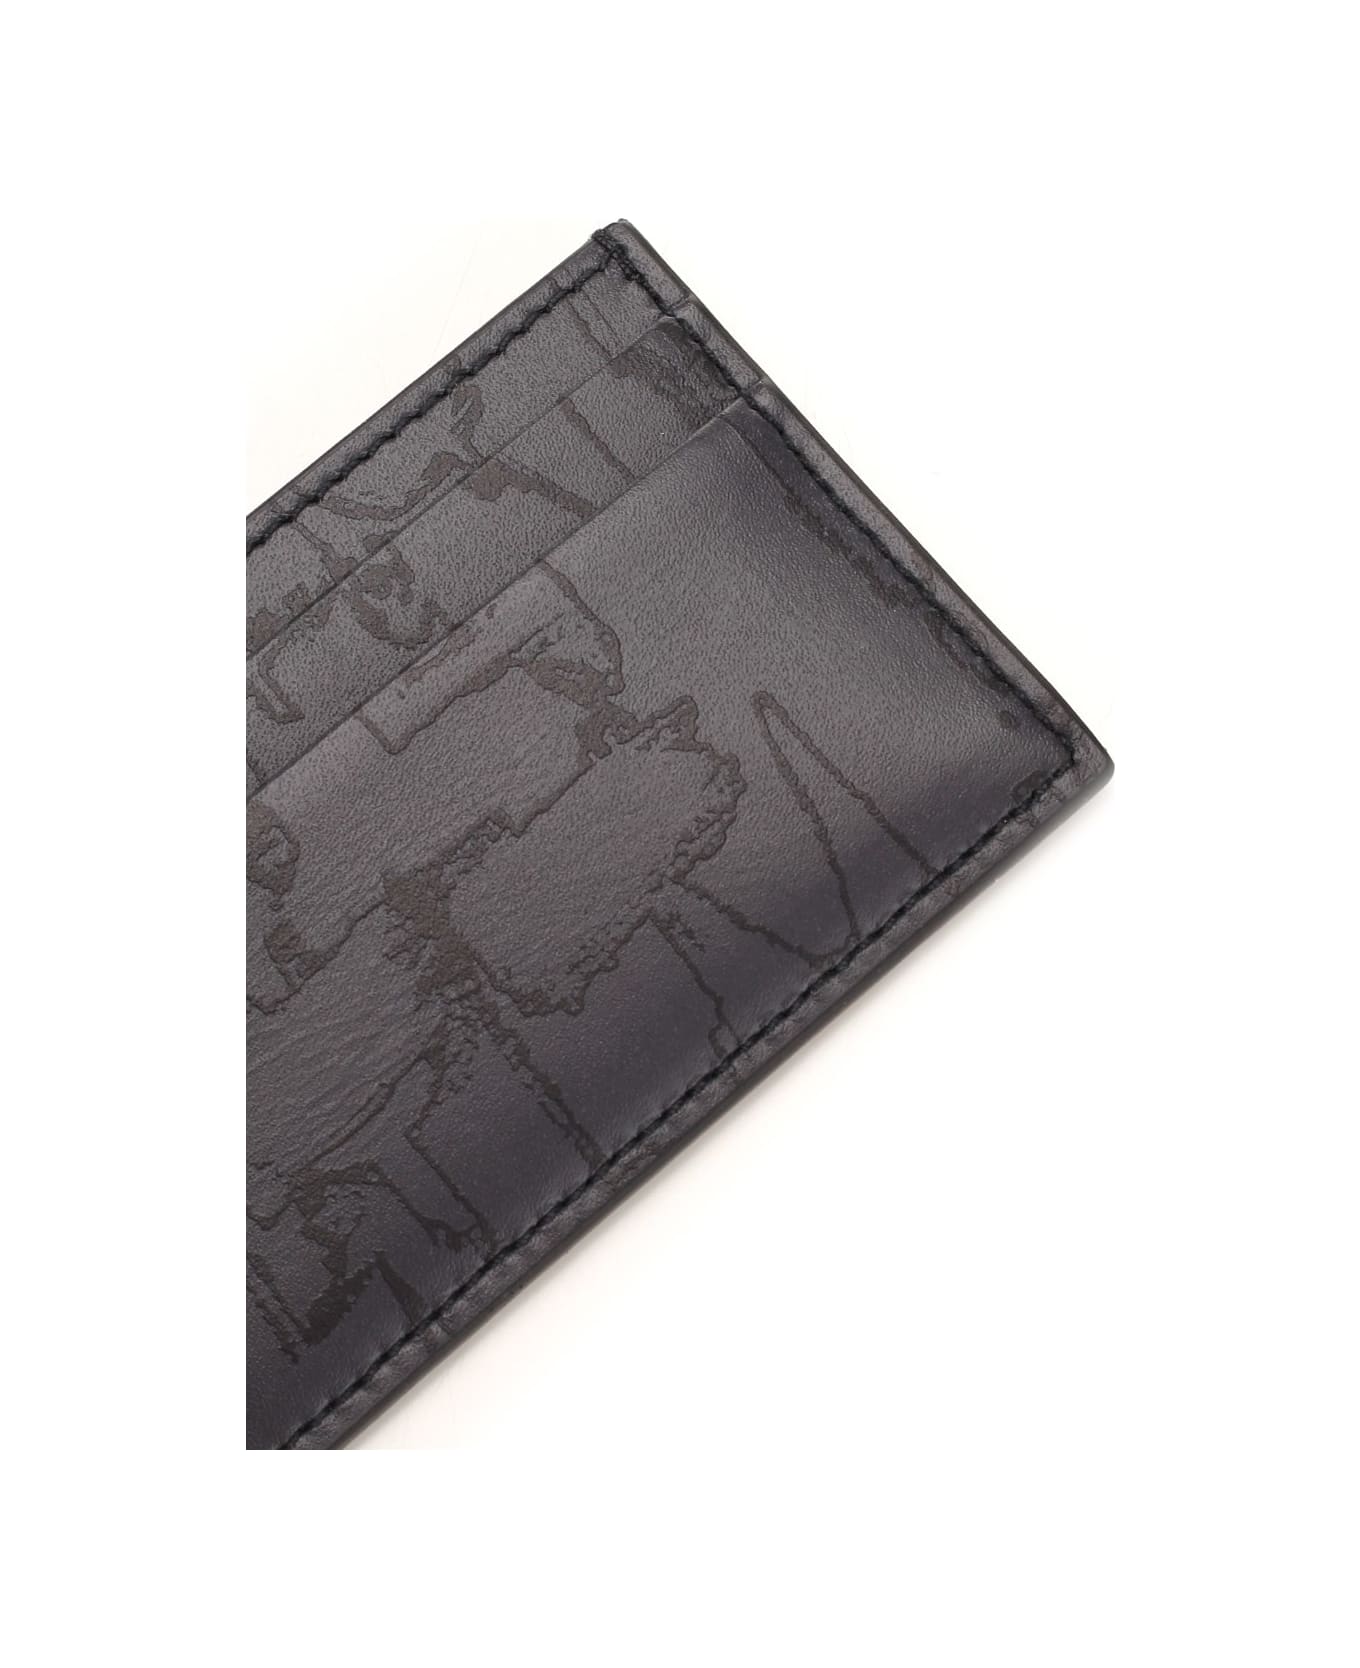 Alexander McQueen Black Leather Card Holder - Black